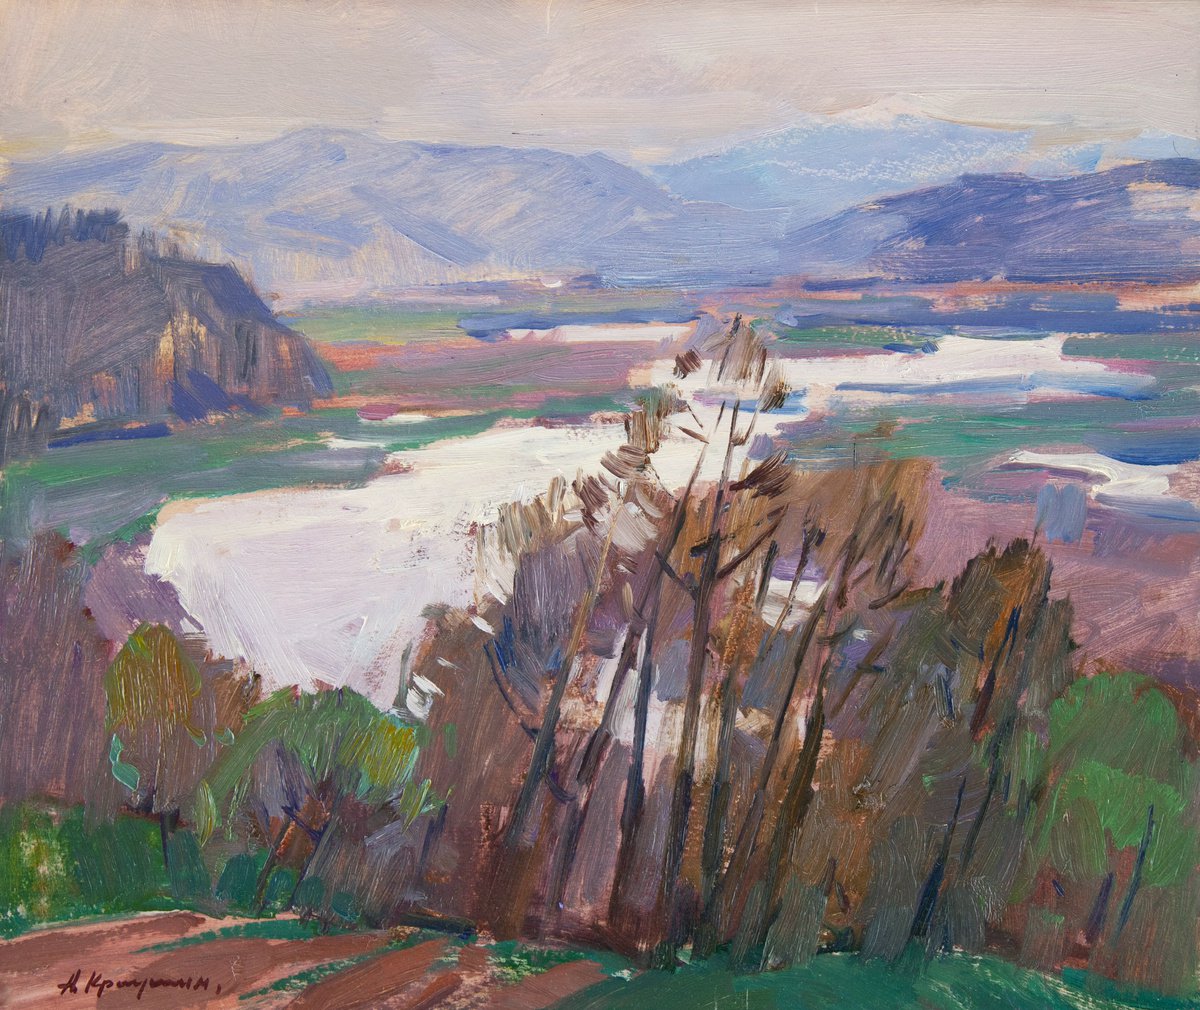 River valley in April by Aleksandr Kryushyn